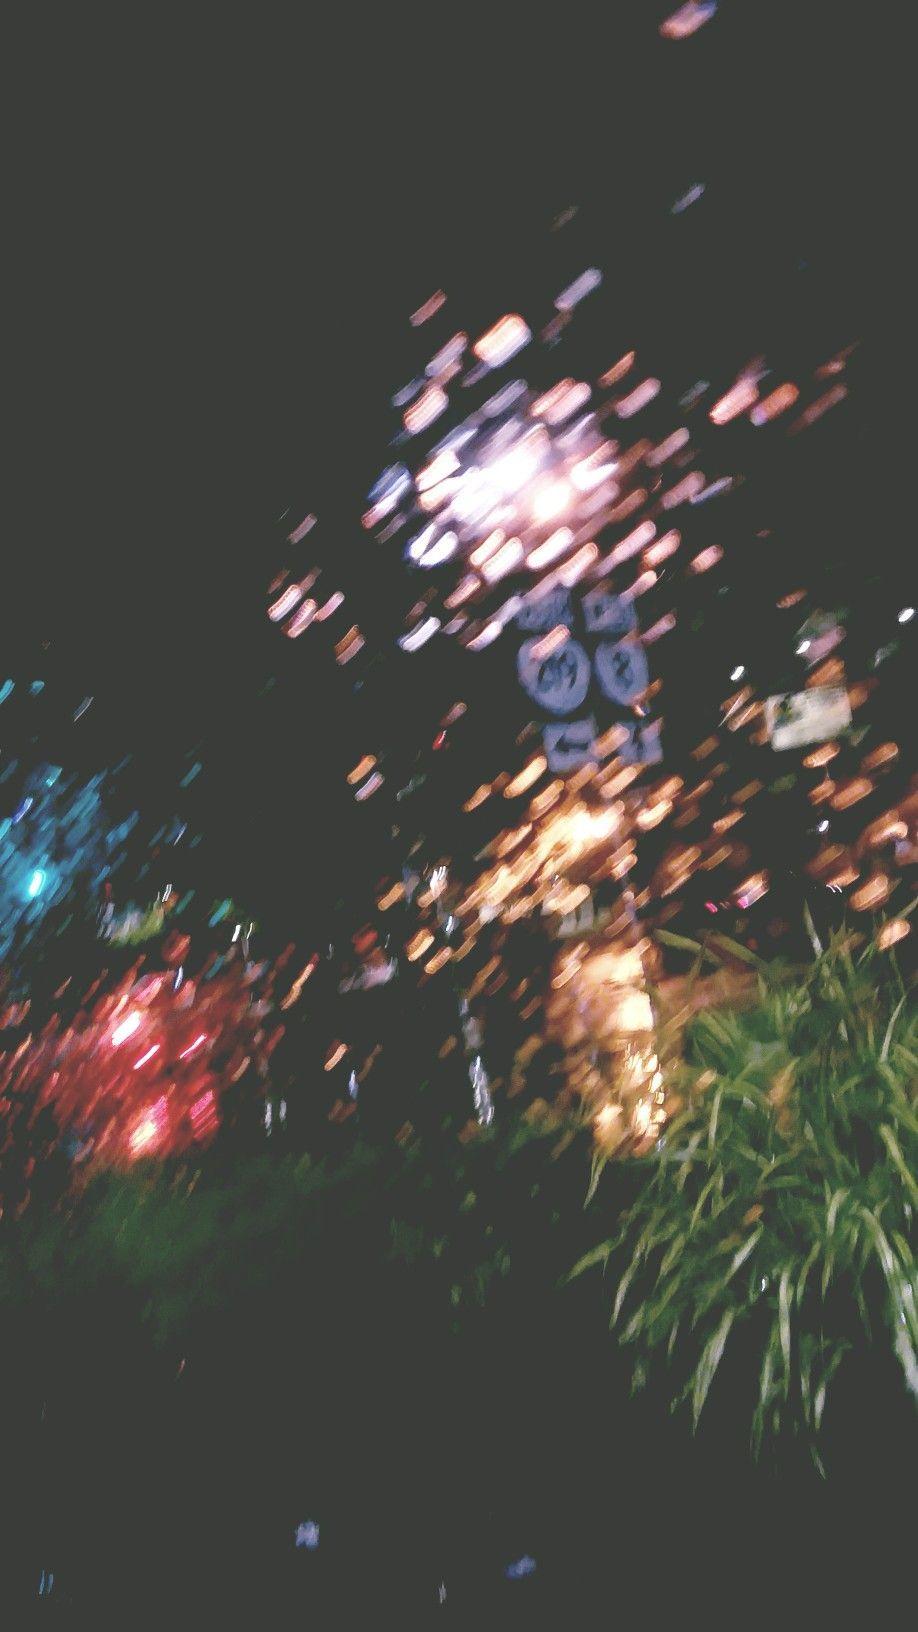 blurry image